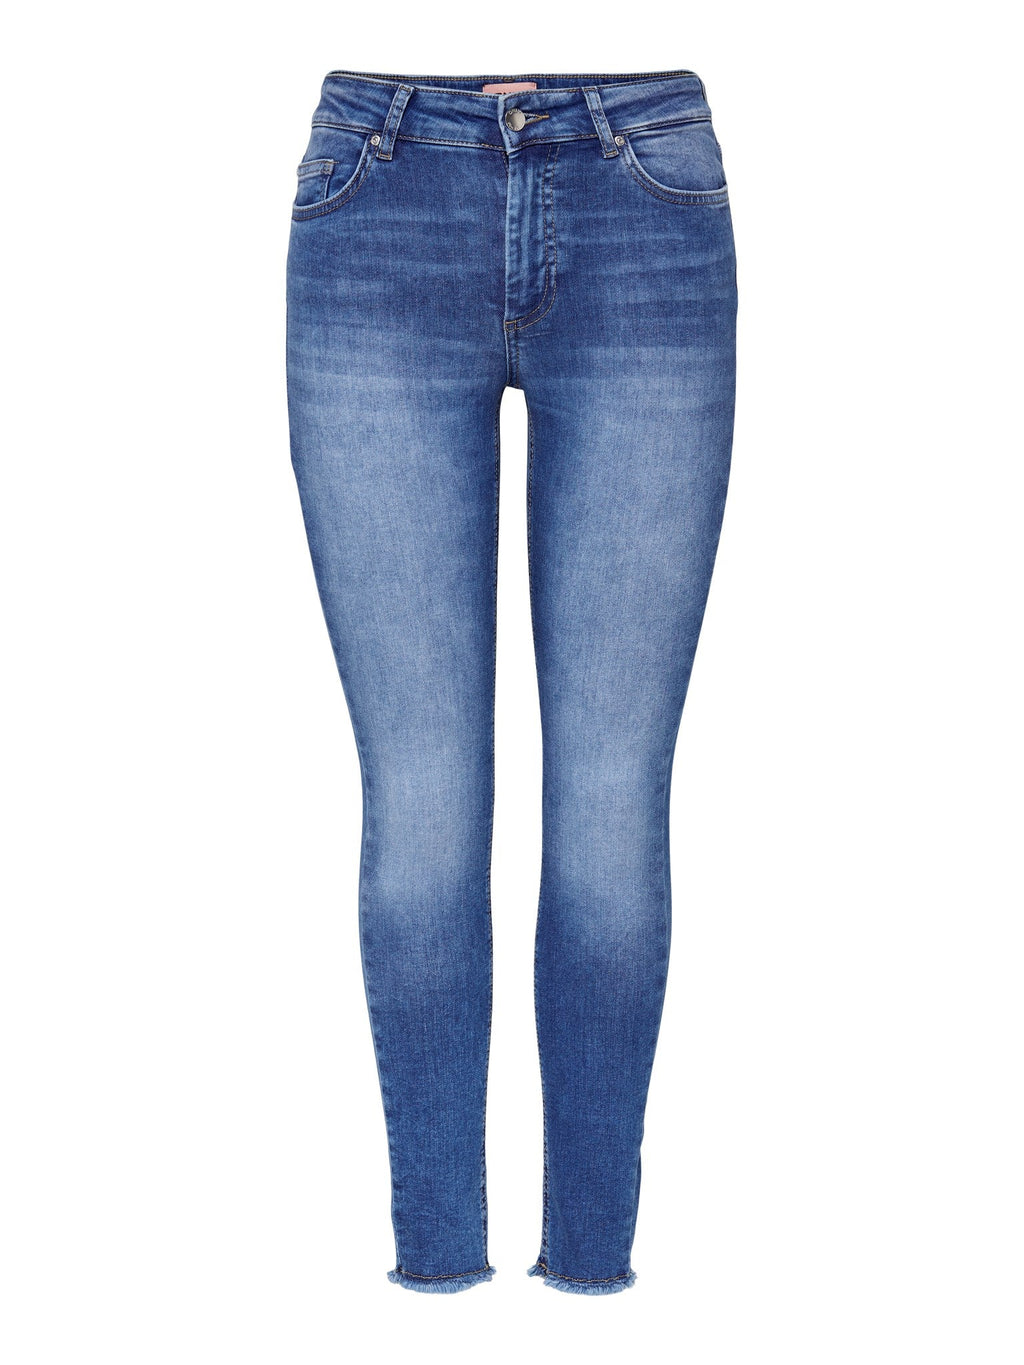 Blush Midsk Jeans - Medium Blue